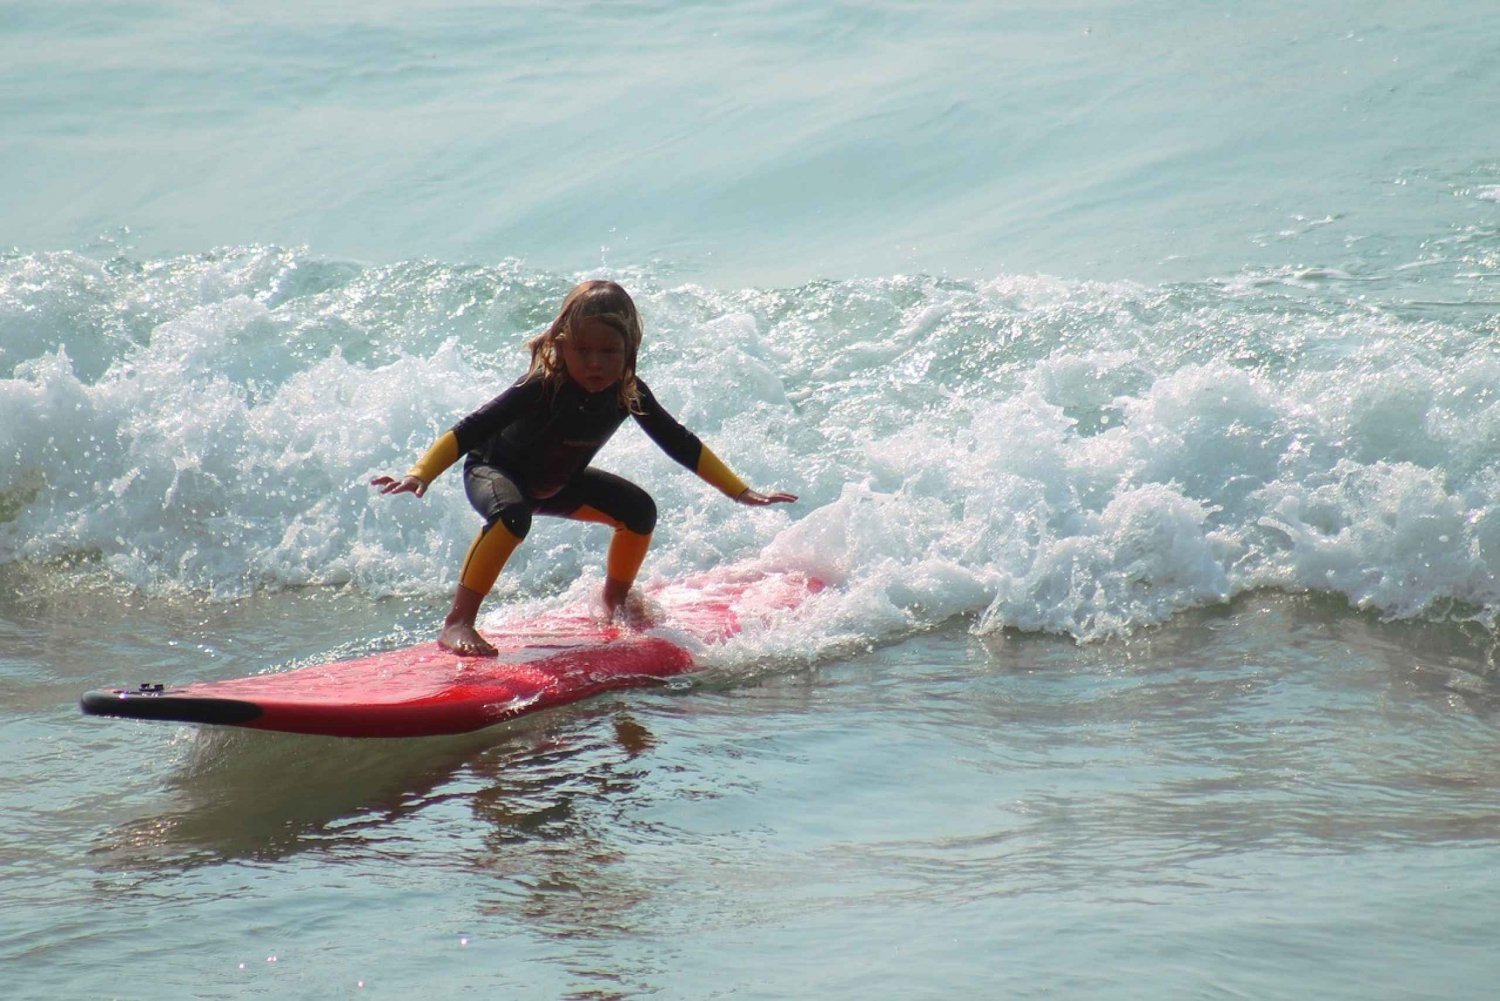 Tel Aviv: Professioneller Surfunterricht im Beach Club TLV